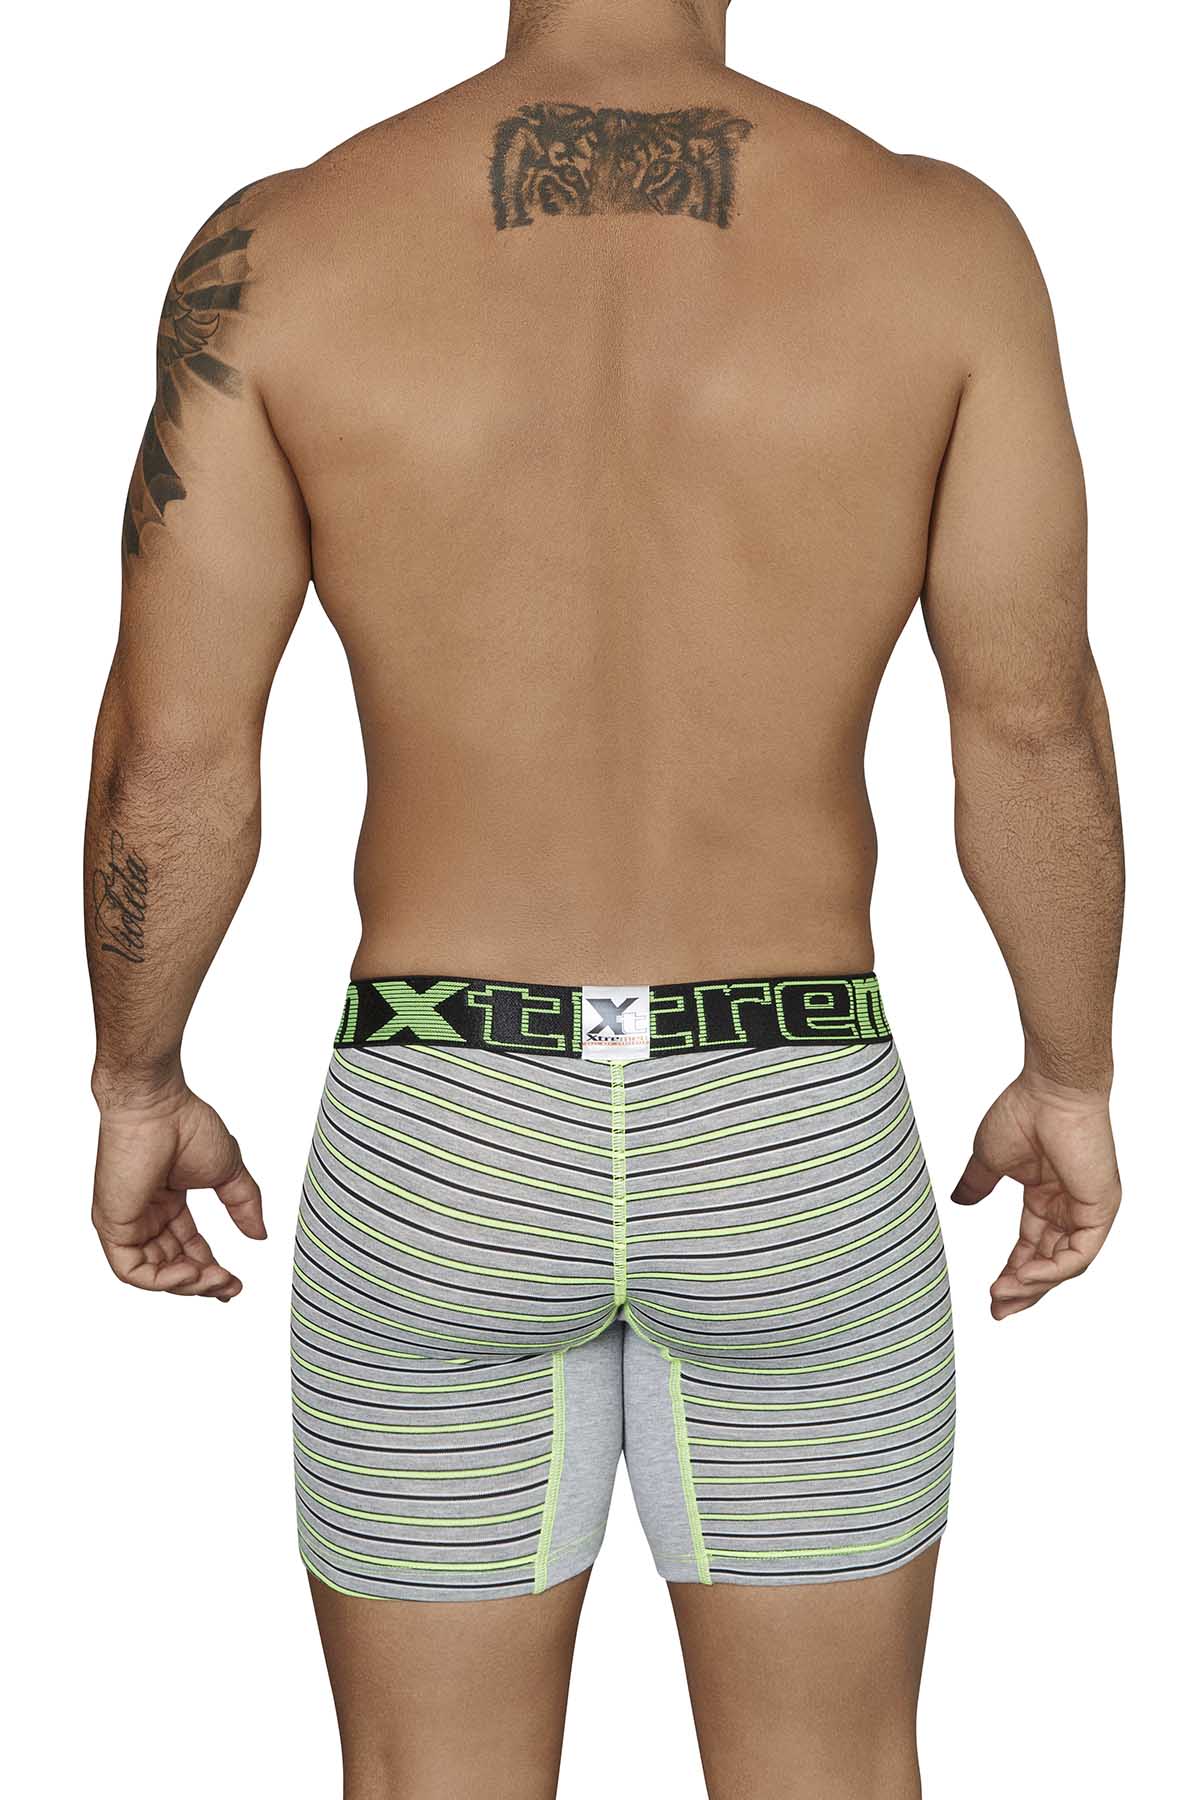 XTREMEN Lime/Grey/Black Striped-Panel Cotton Boxer Brief